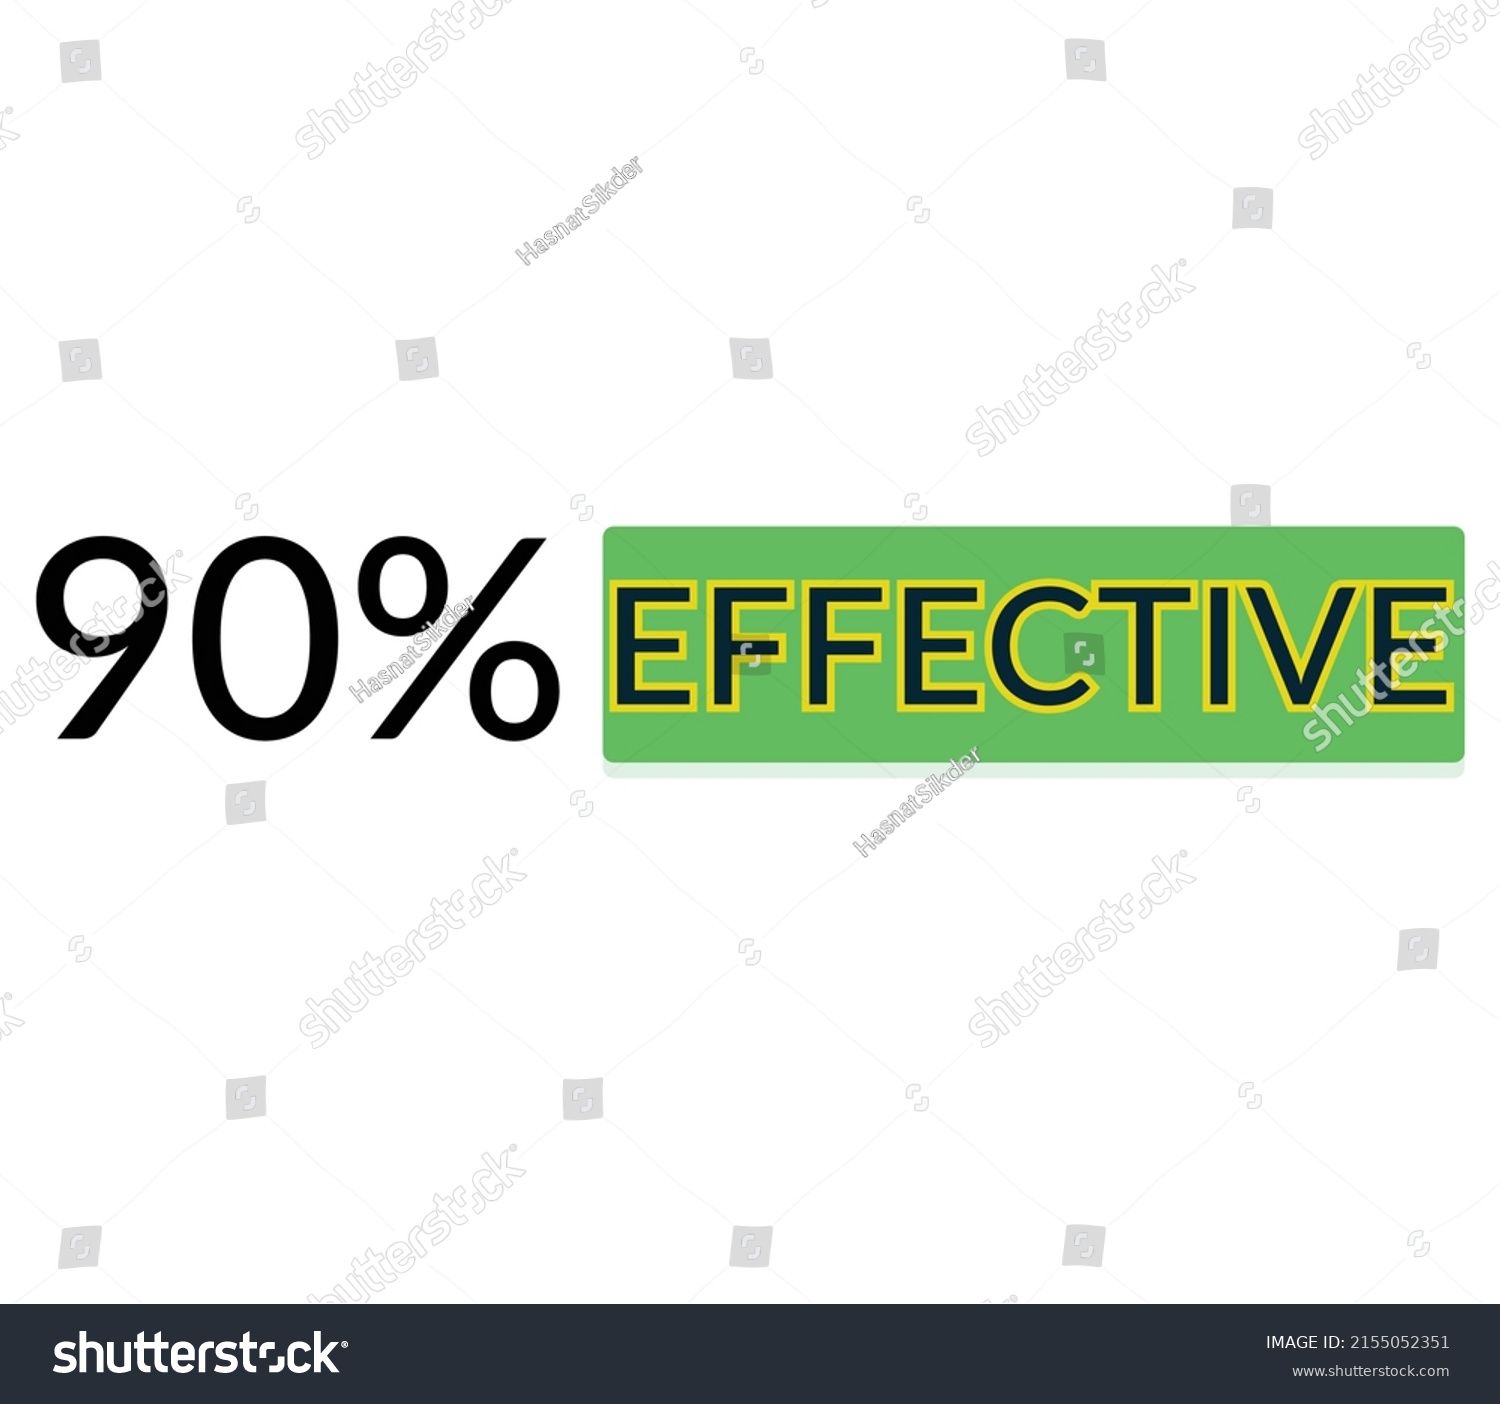 90% percentage effective sign label vector art illustration with fantastic font and green color #2155052351